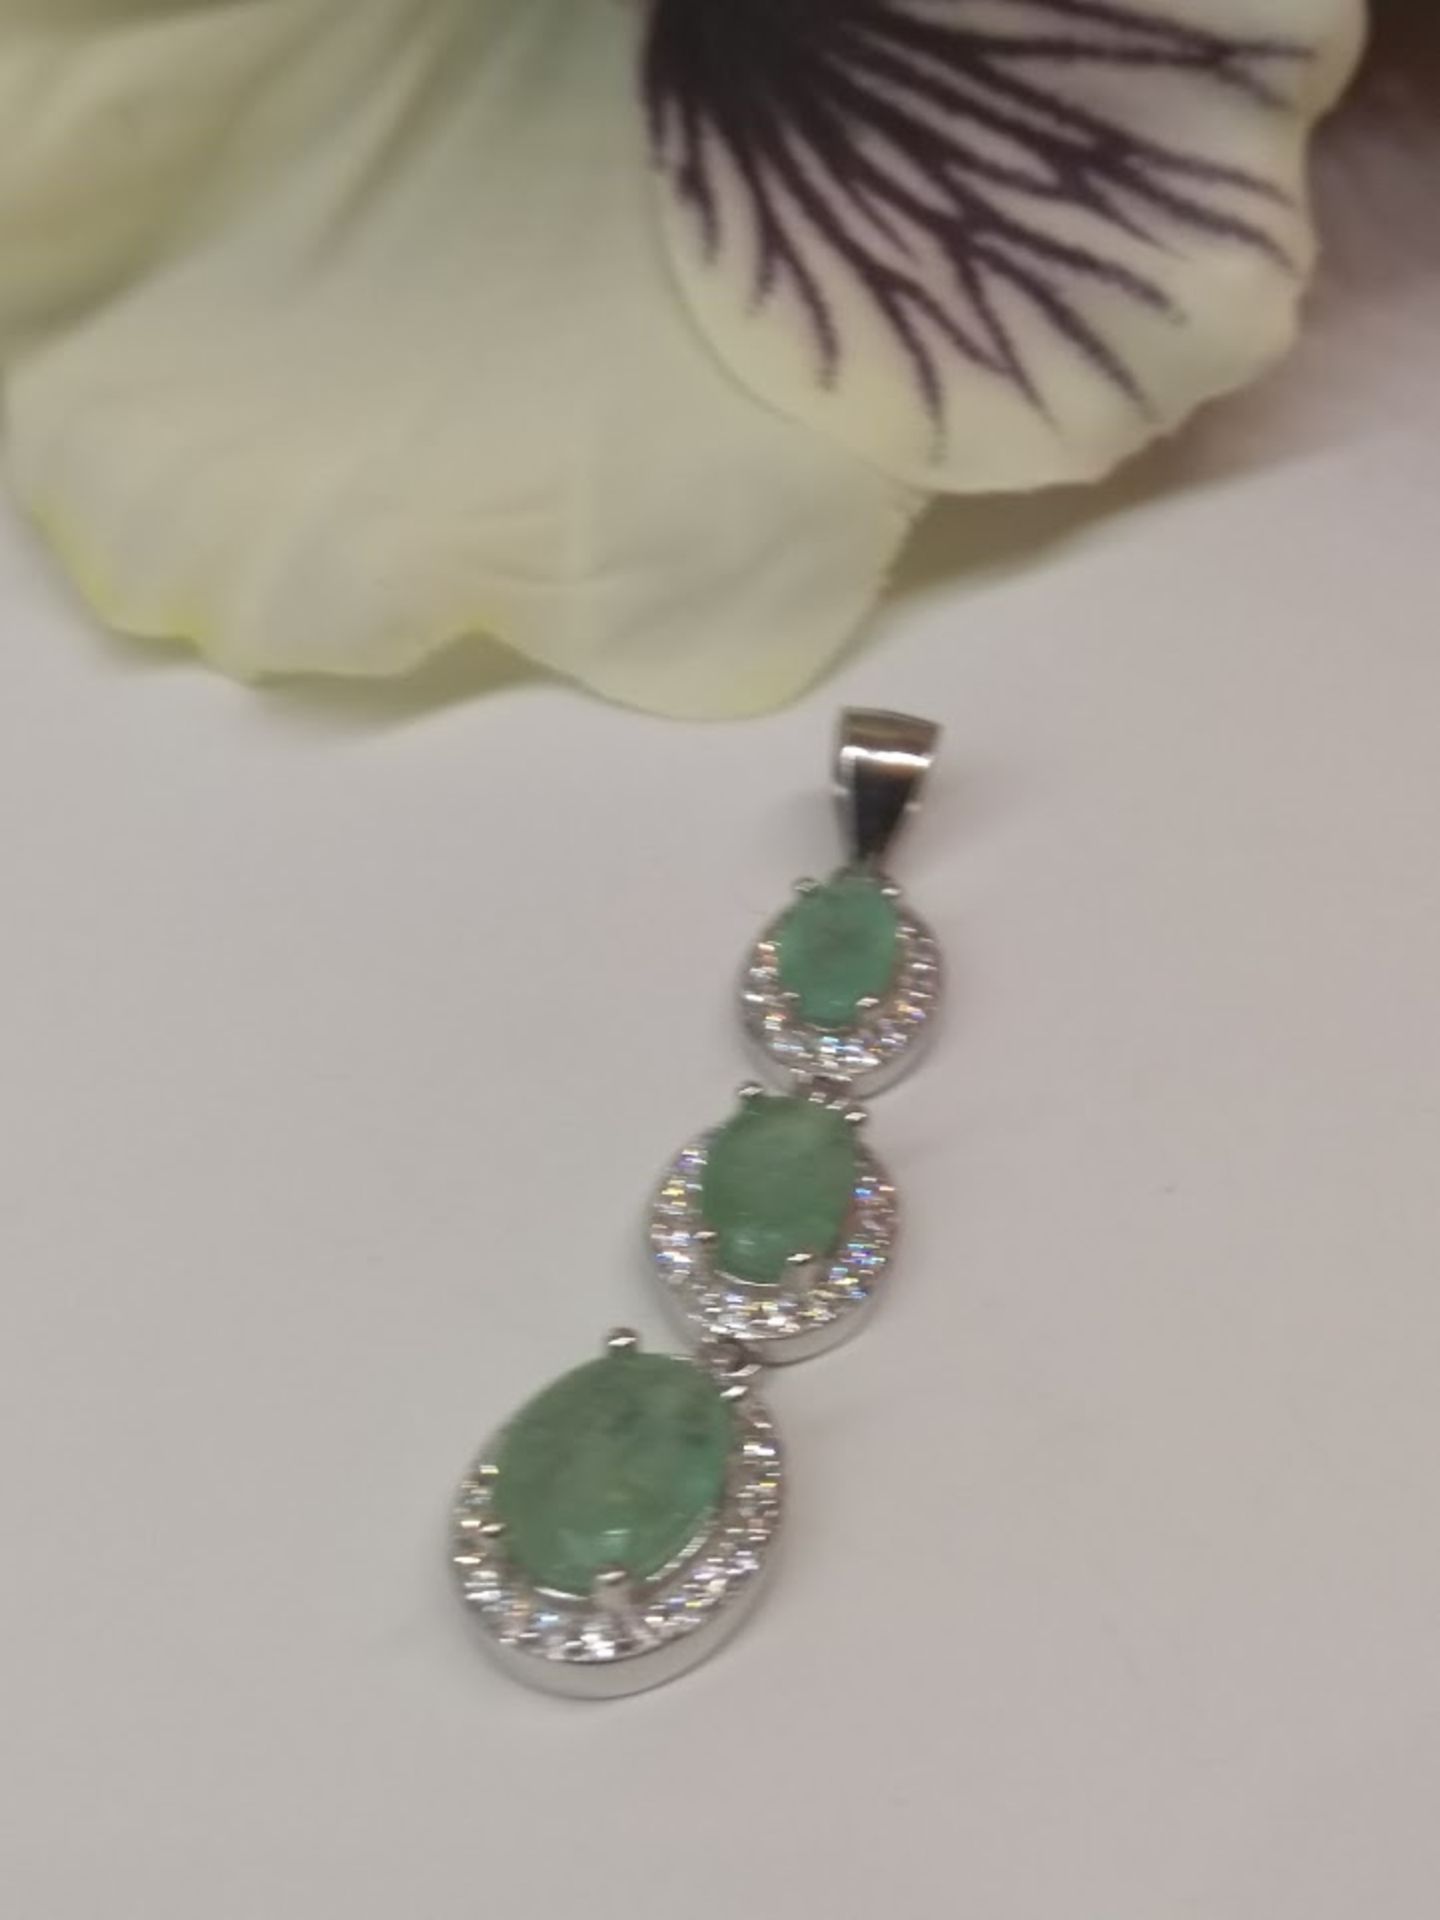 Gorgeous Oval Cut Rich Green Natural Brazilian Emerald Gemstone Pendant, Bespoke - Unique - Image 2 of 2